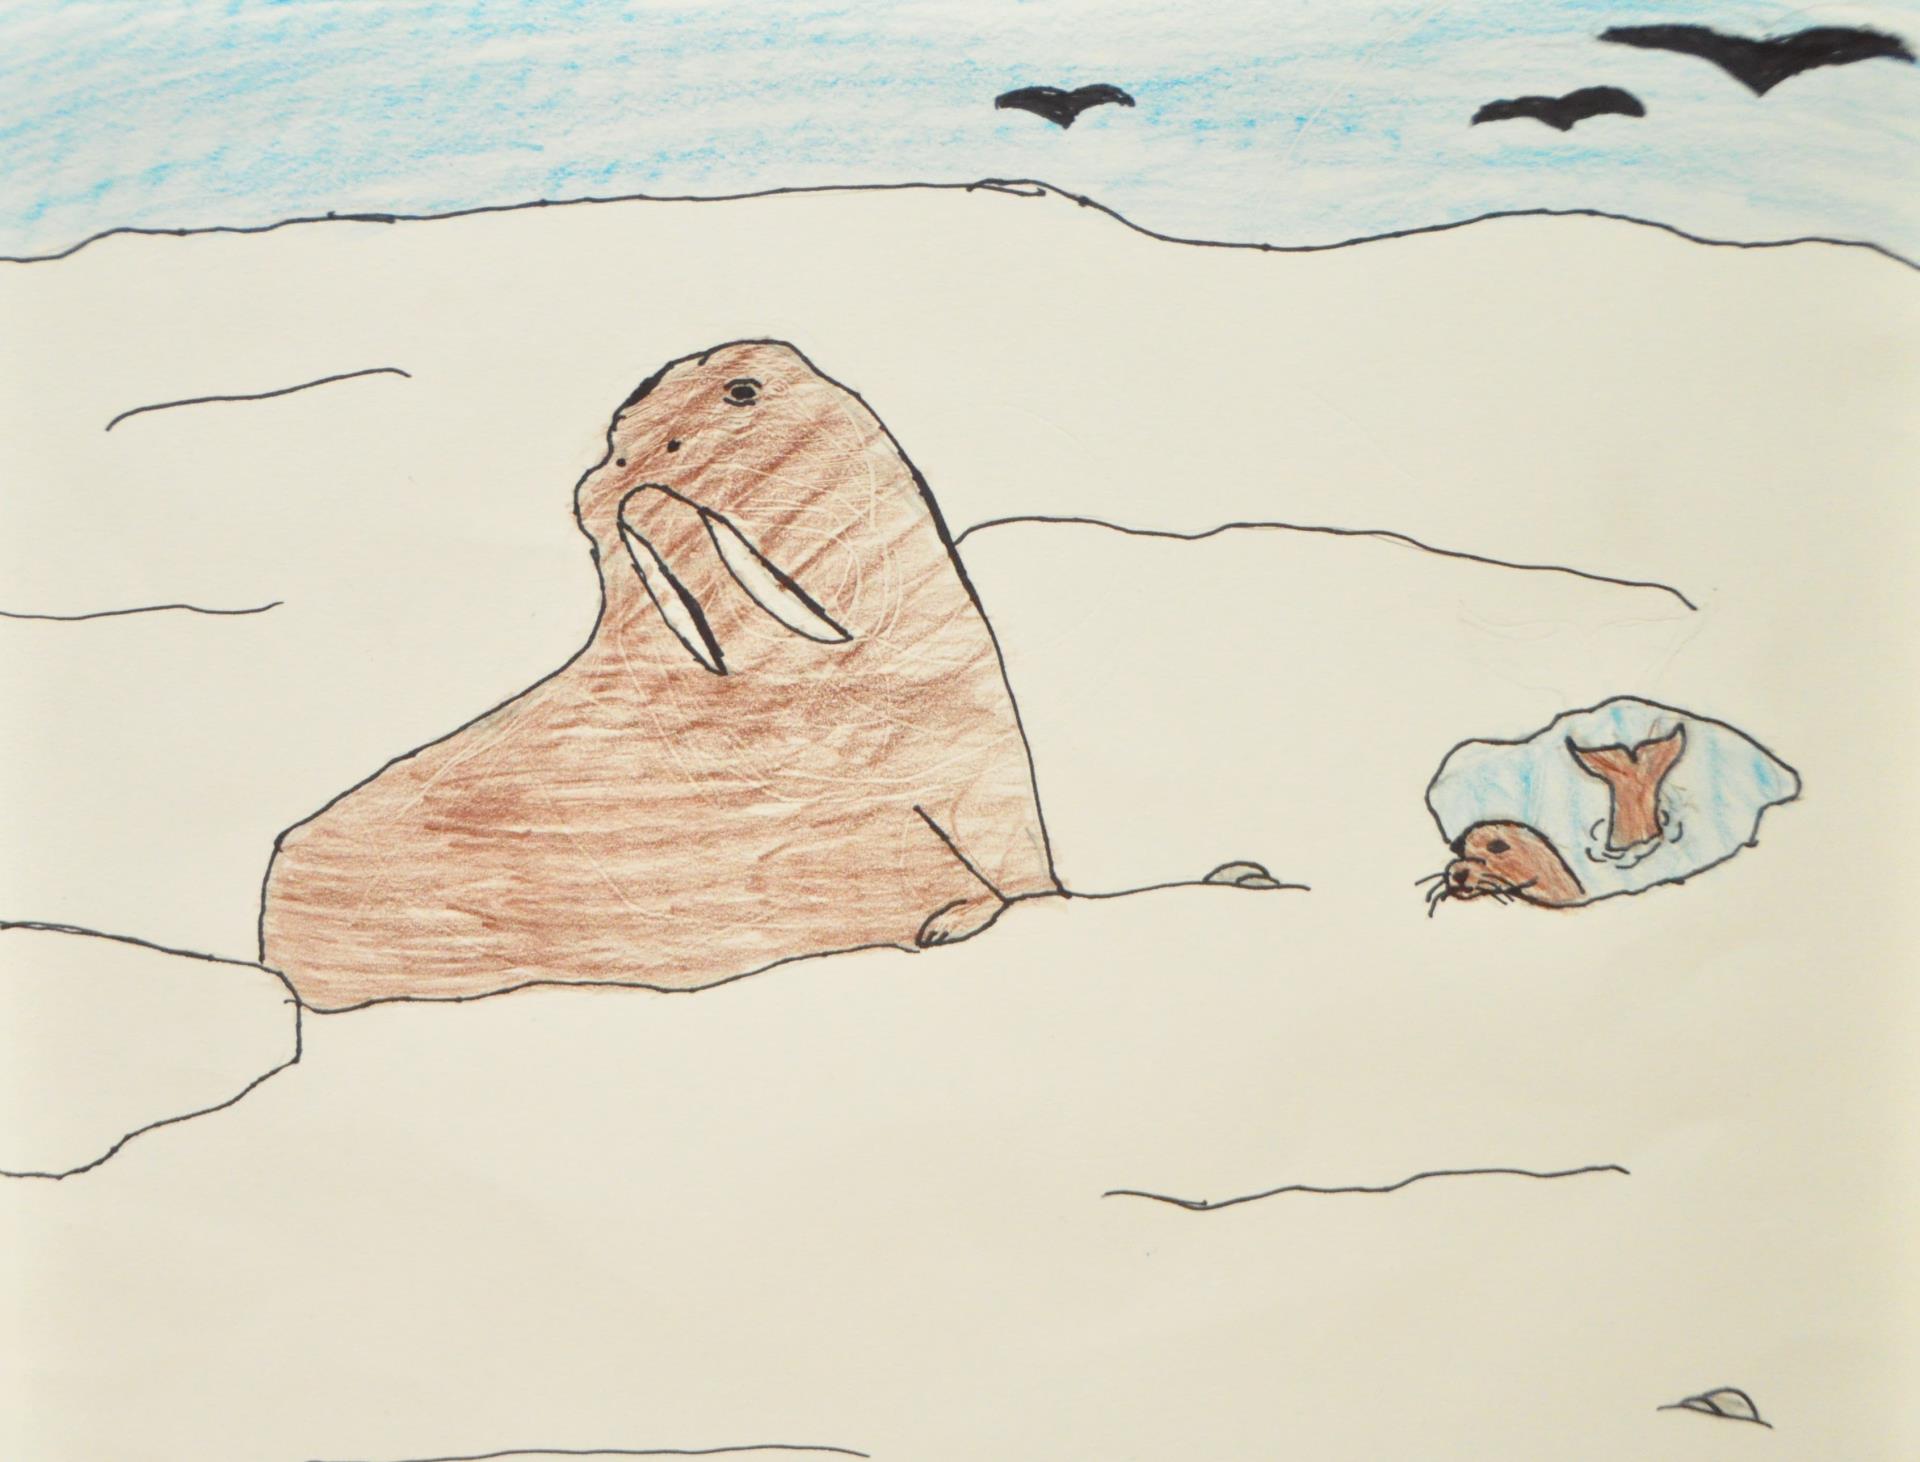 Sarinah - The Walrus' New Friend